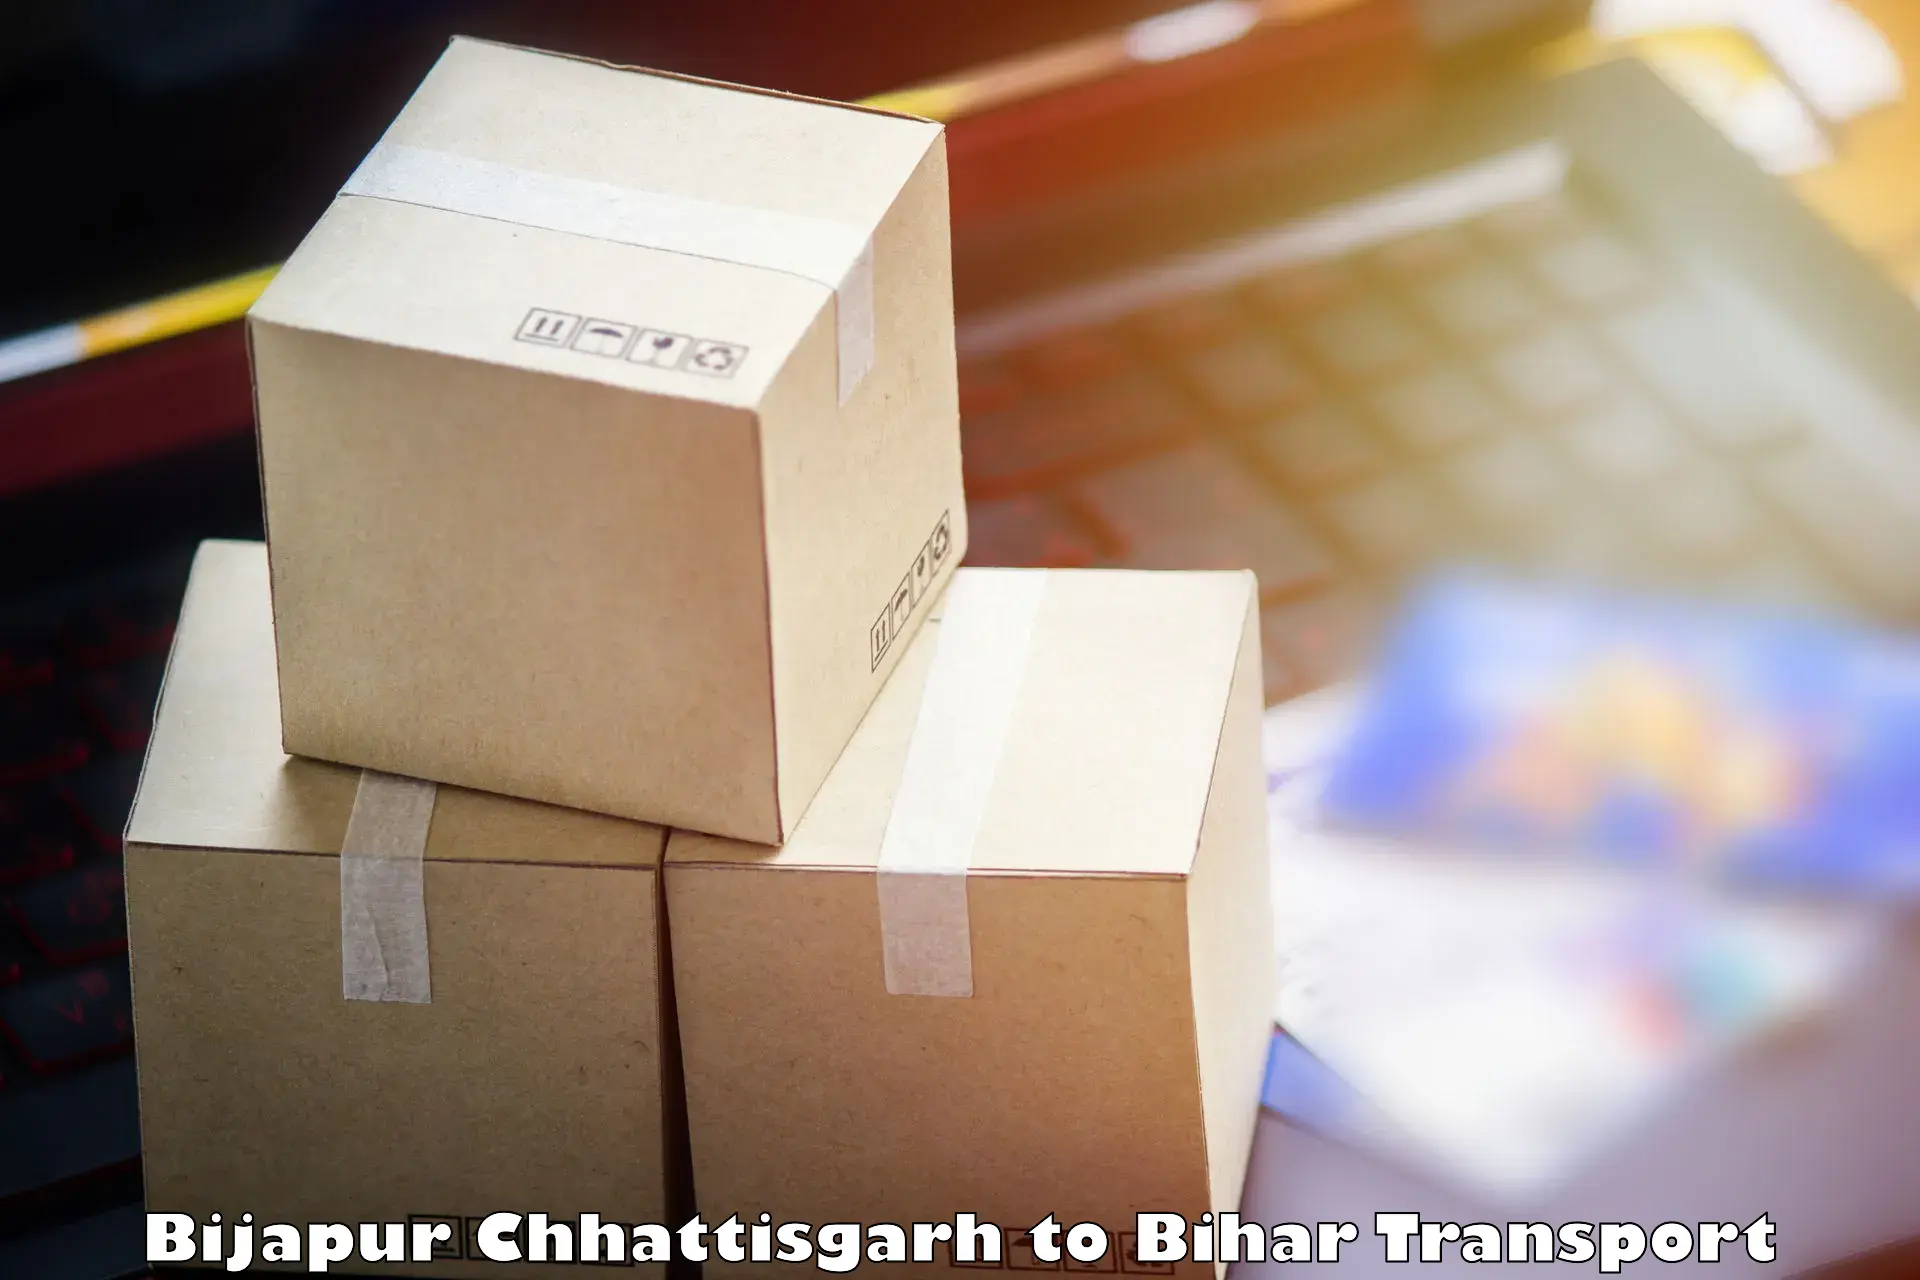 Truck transport companies in India Bijapur Chhattisgarh to Kishanganj